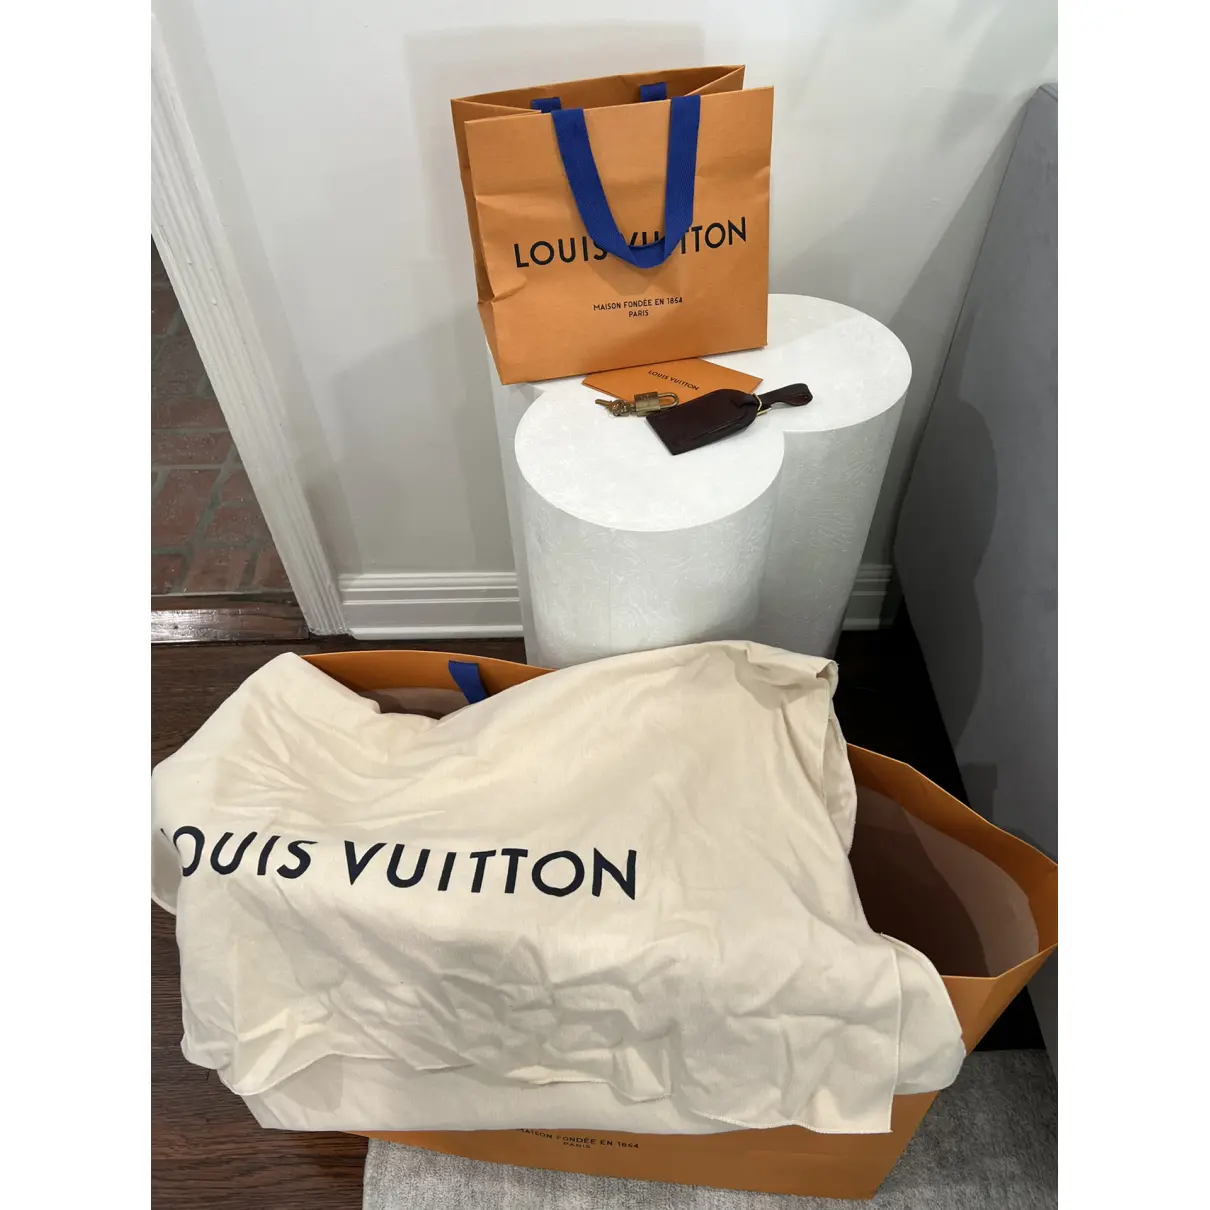 Leather travel bag Louis Vuitton